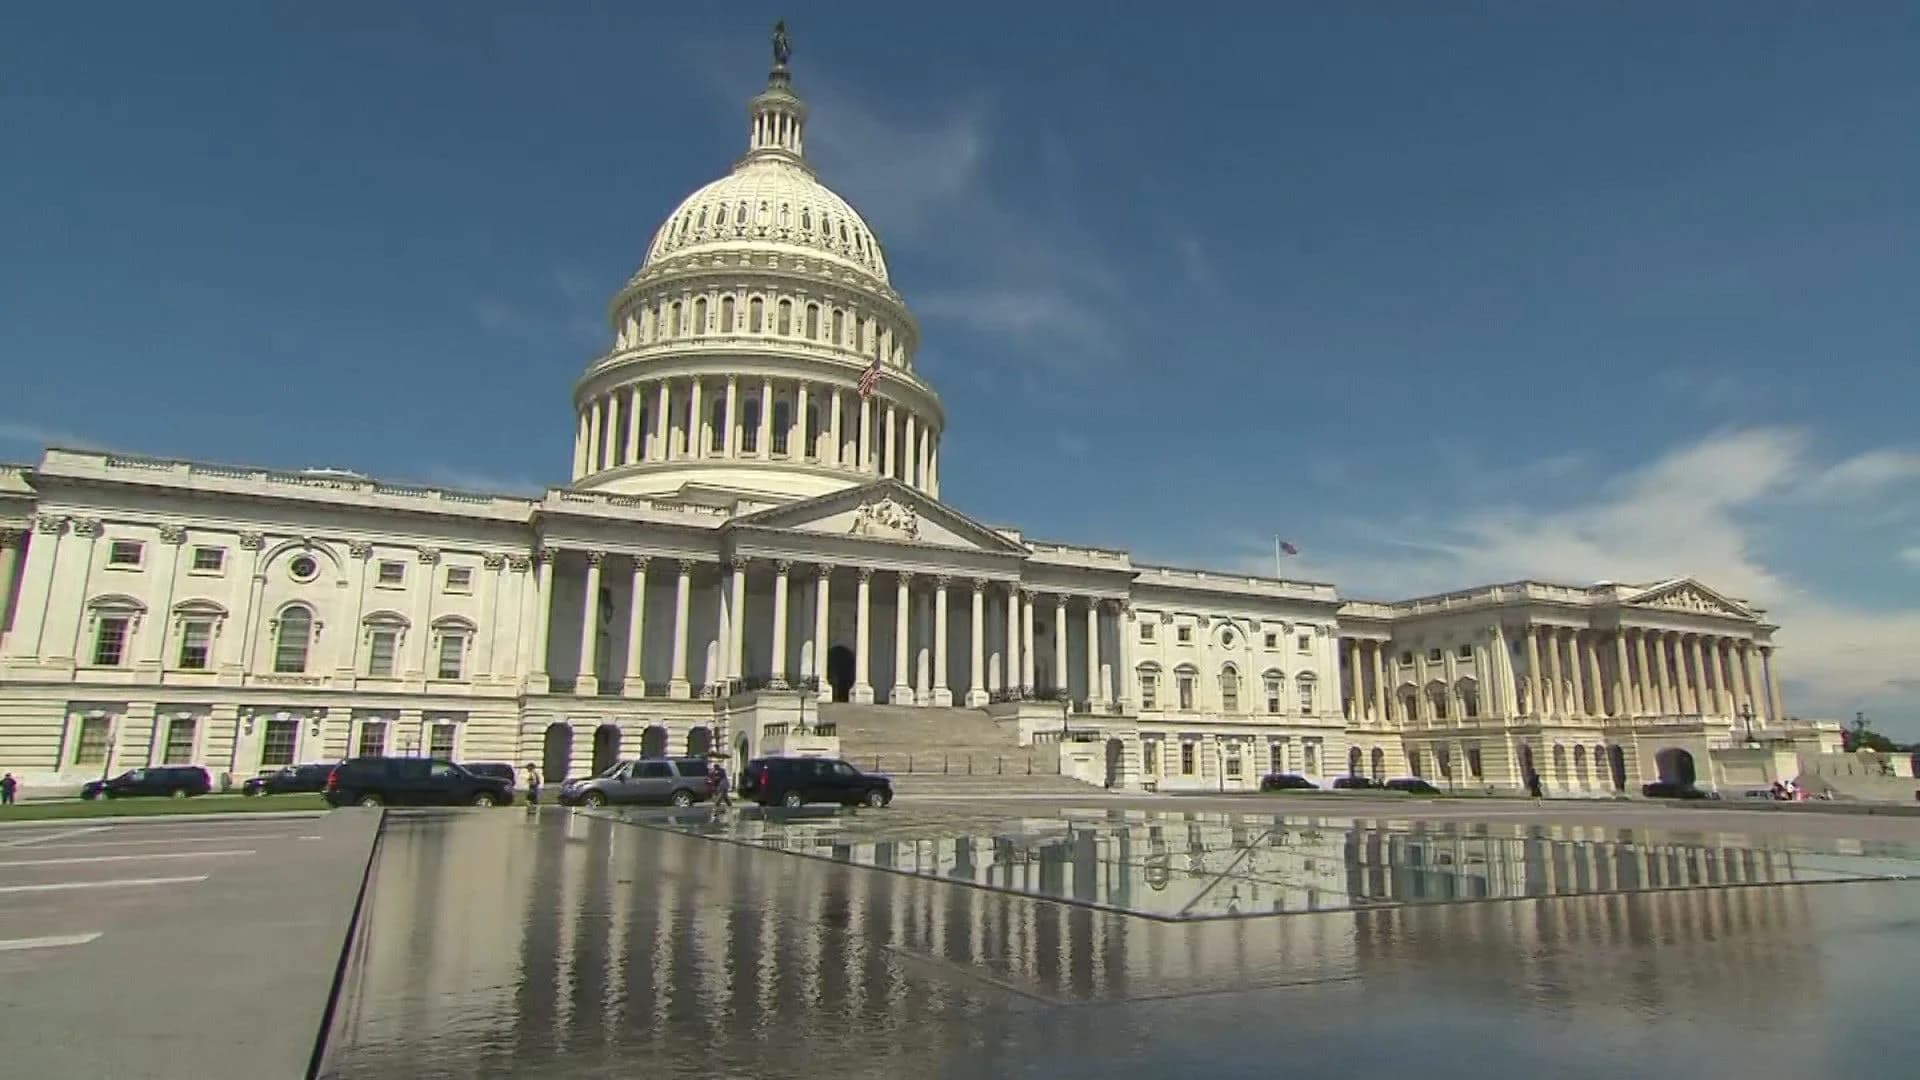 Midnight shutdown creeps closer as Congress debates budget